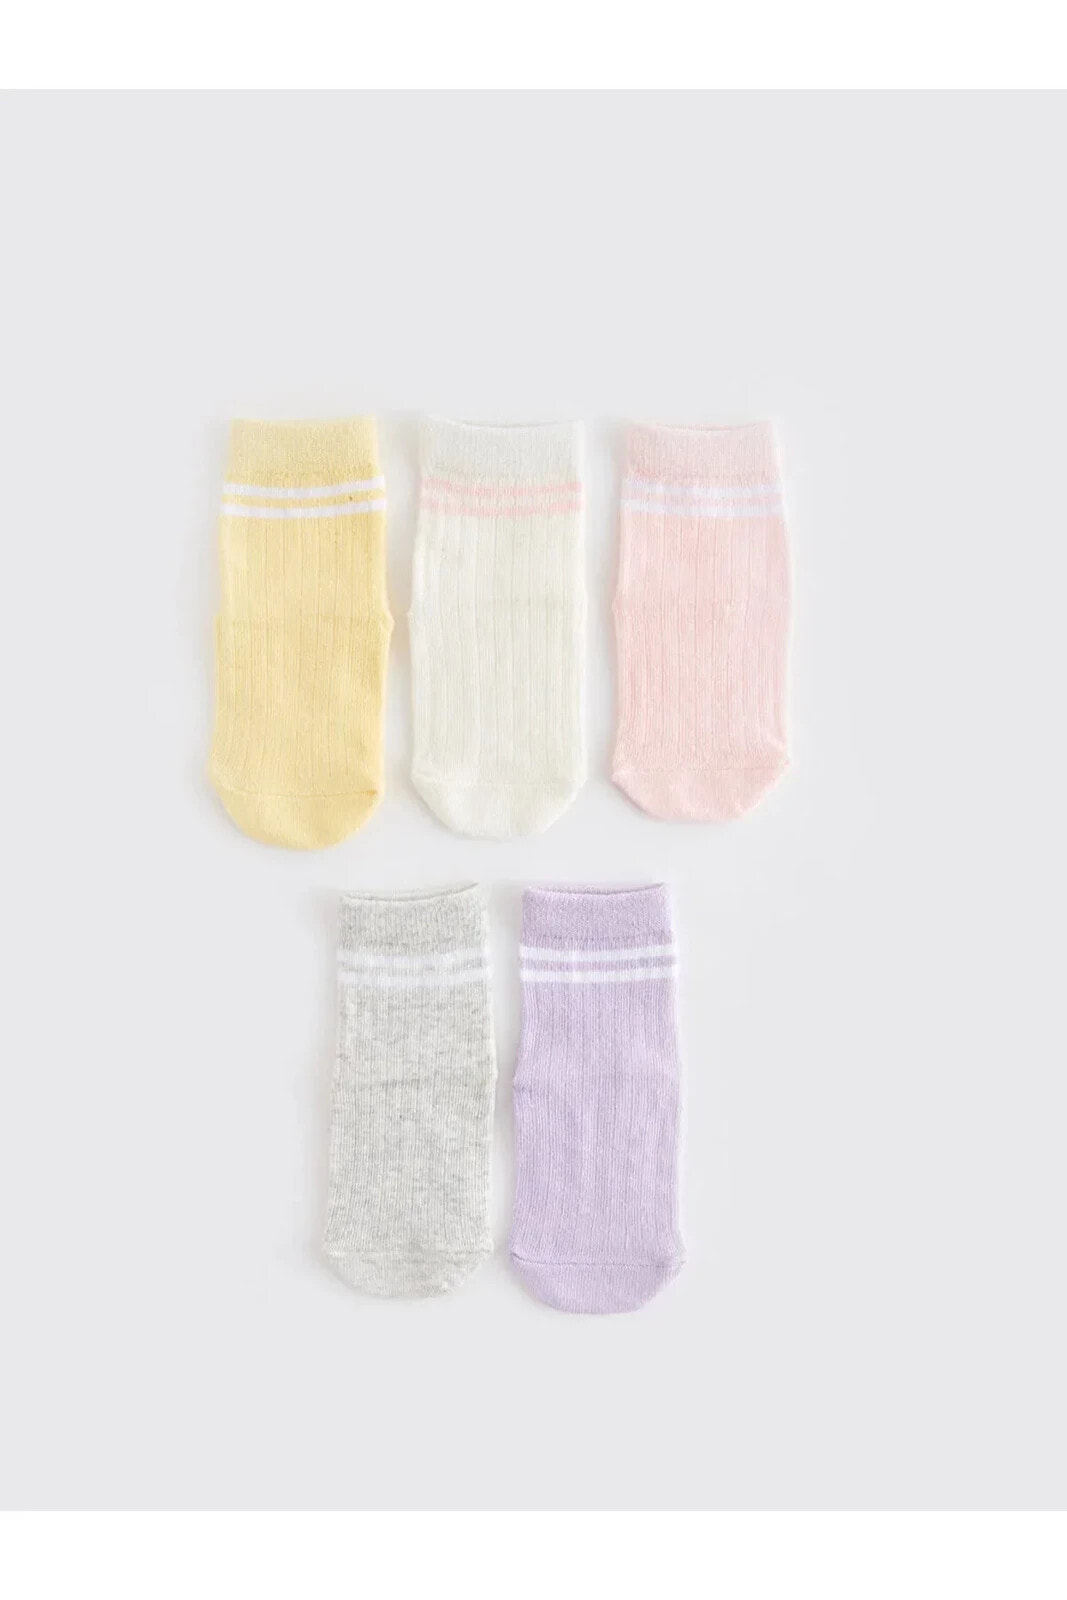 LCW baby Çizgili Kız Bebek Soket Çorap 5'li